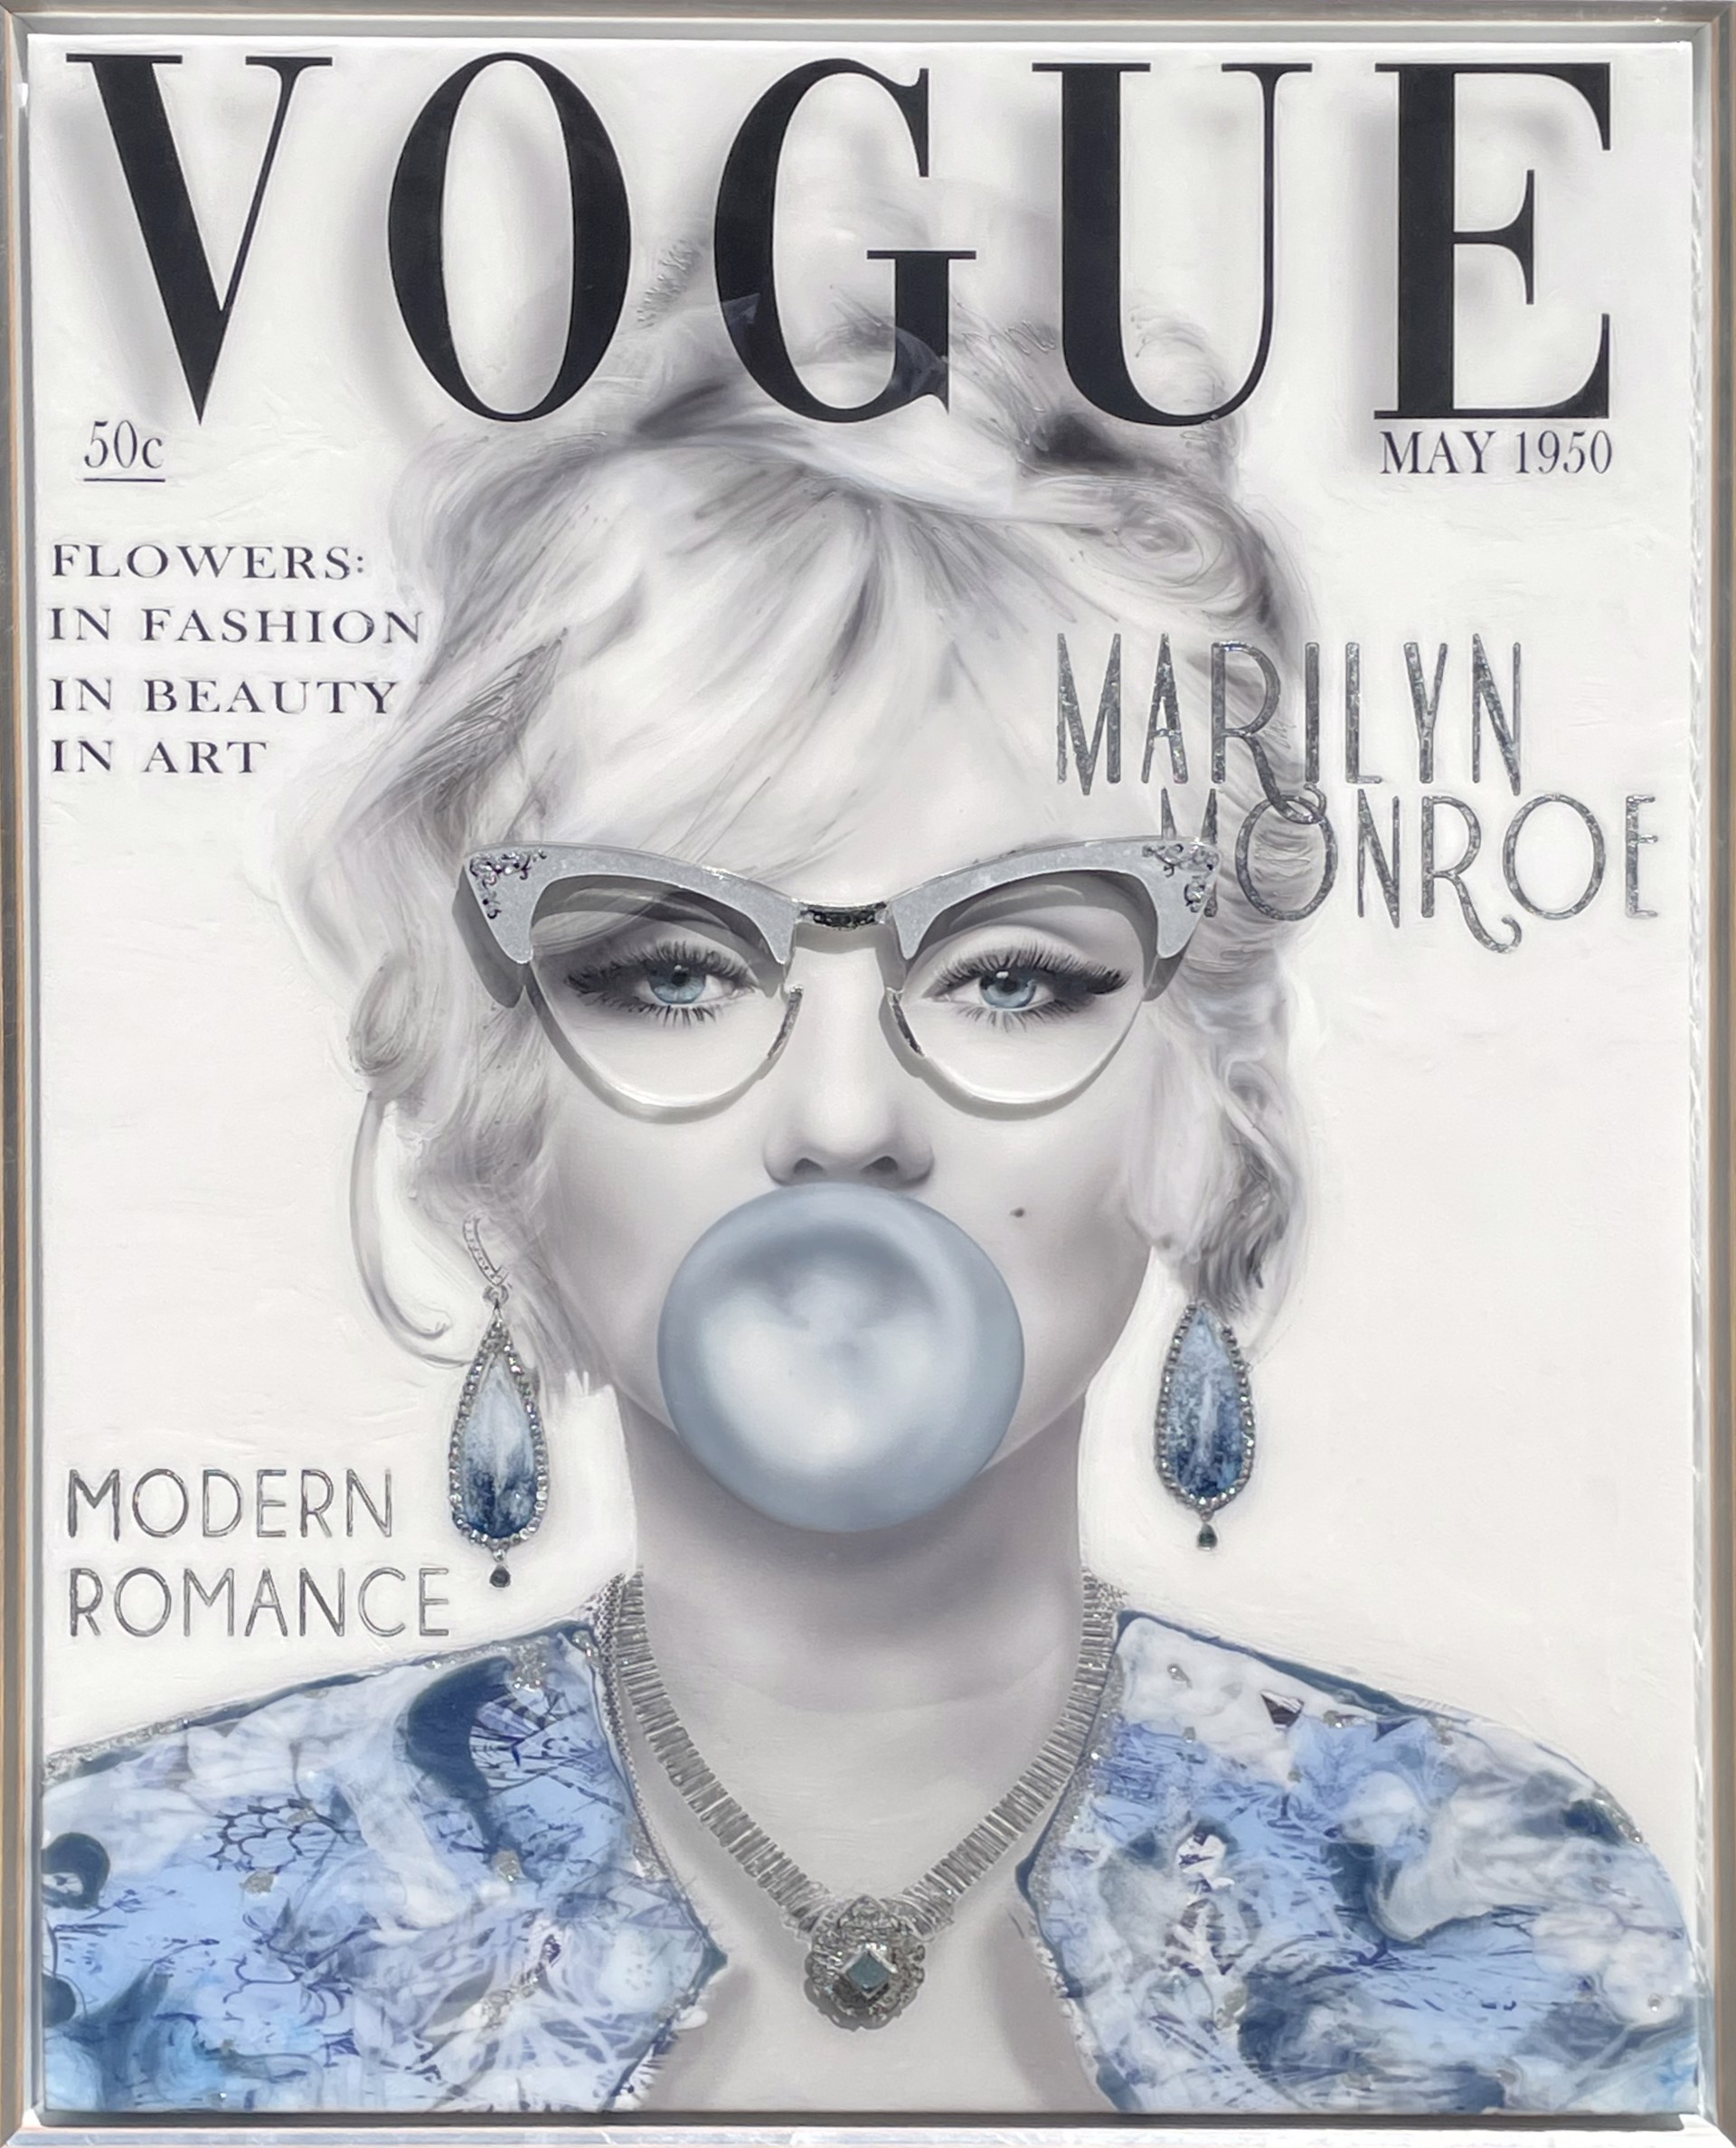 Vogue - Marilyn, Modern Romance by Dean Johnson